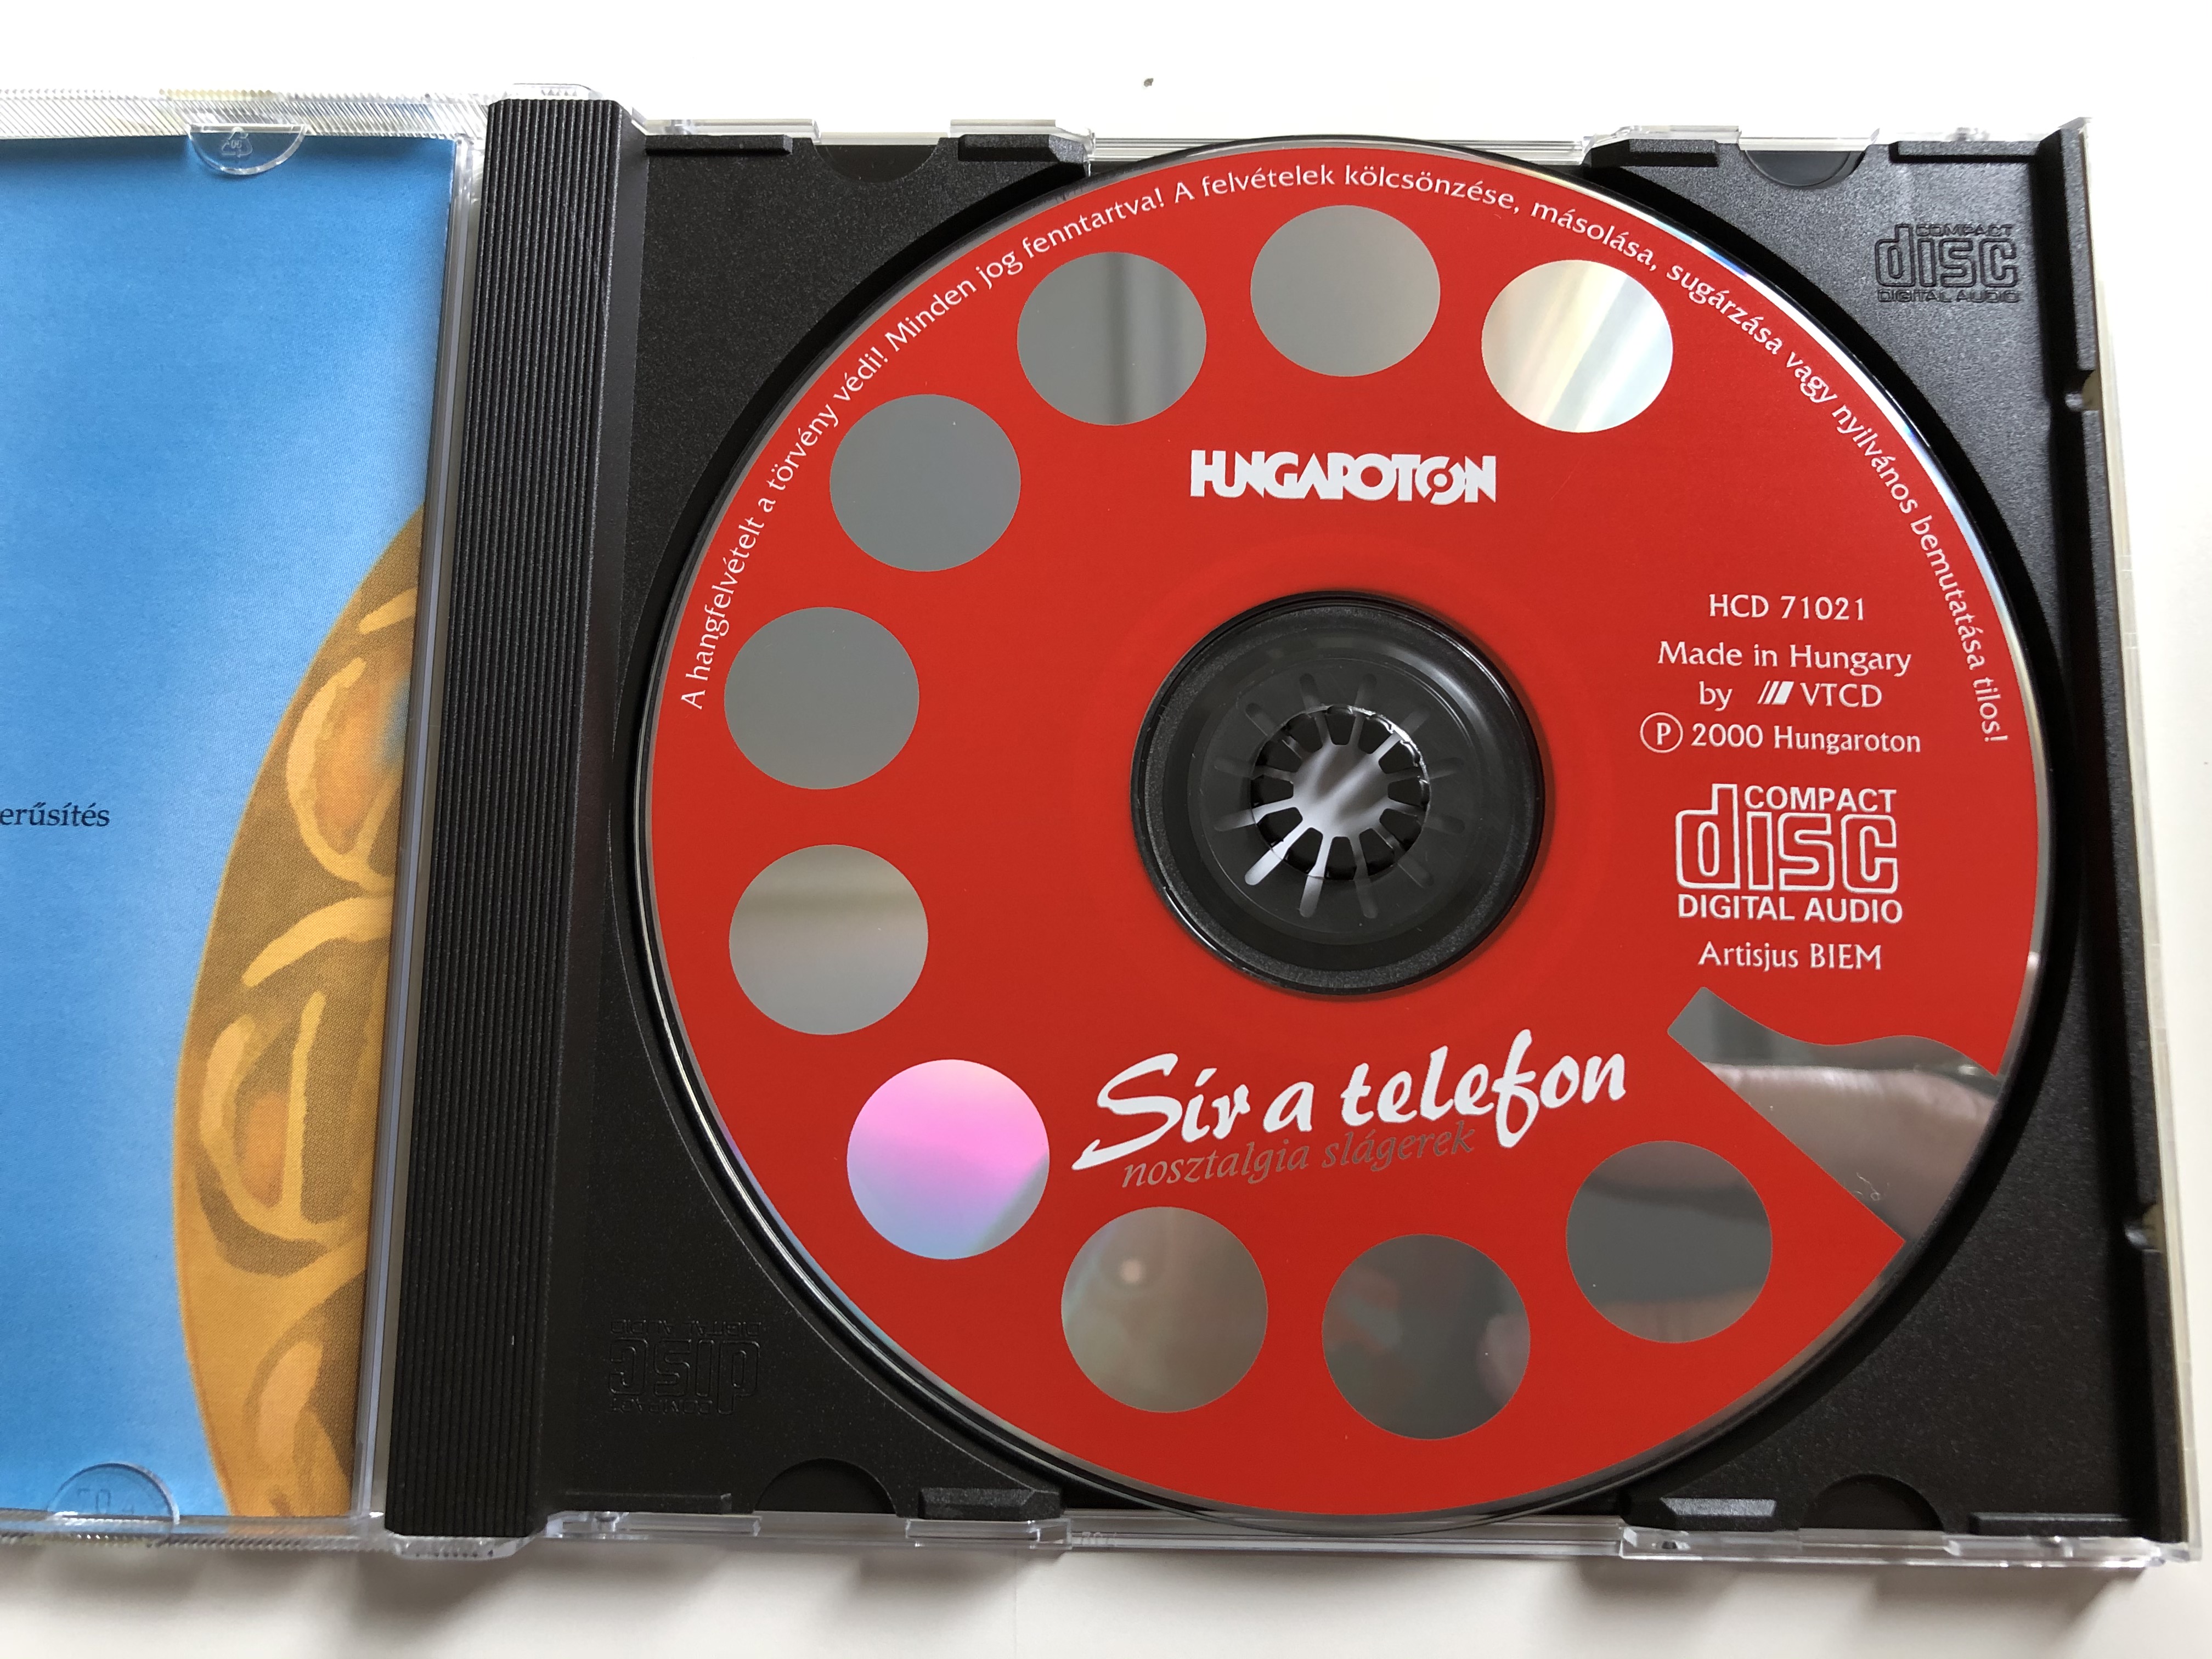 s-r-a-telefon-nosztalgia-sl-gerek-hungaroton-audio-cd-2000-hcd-71021-5-.jpg